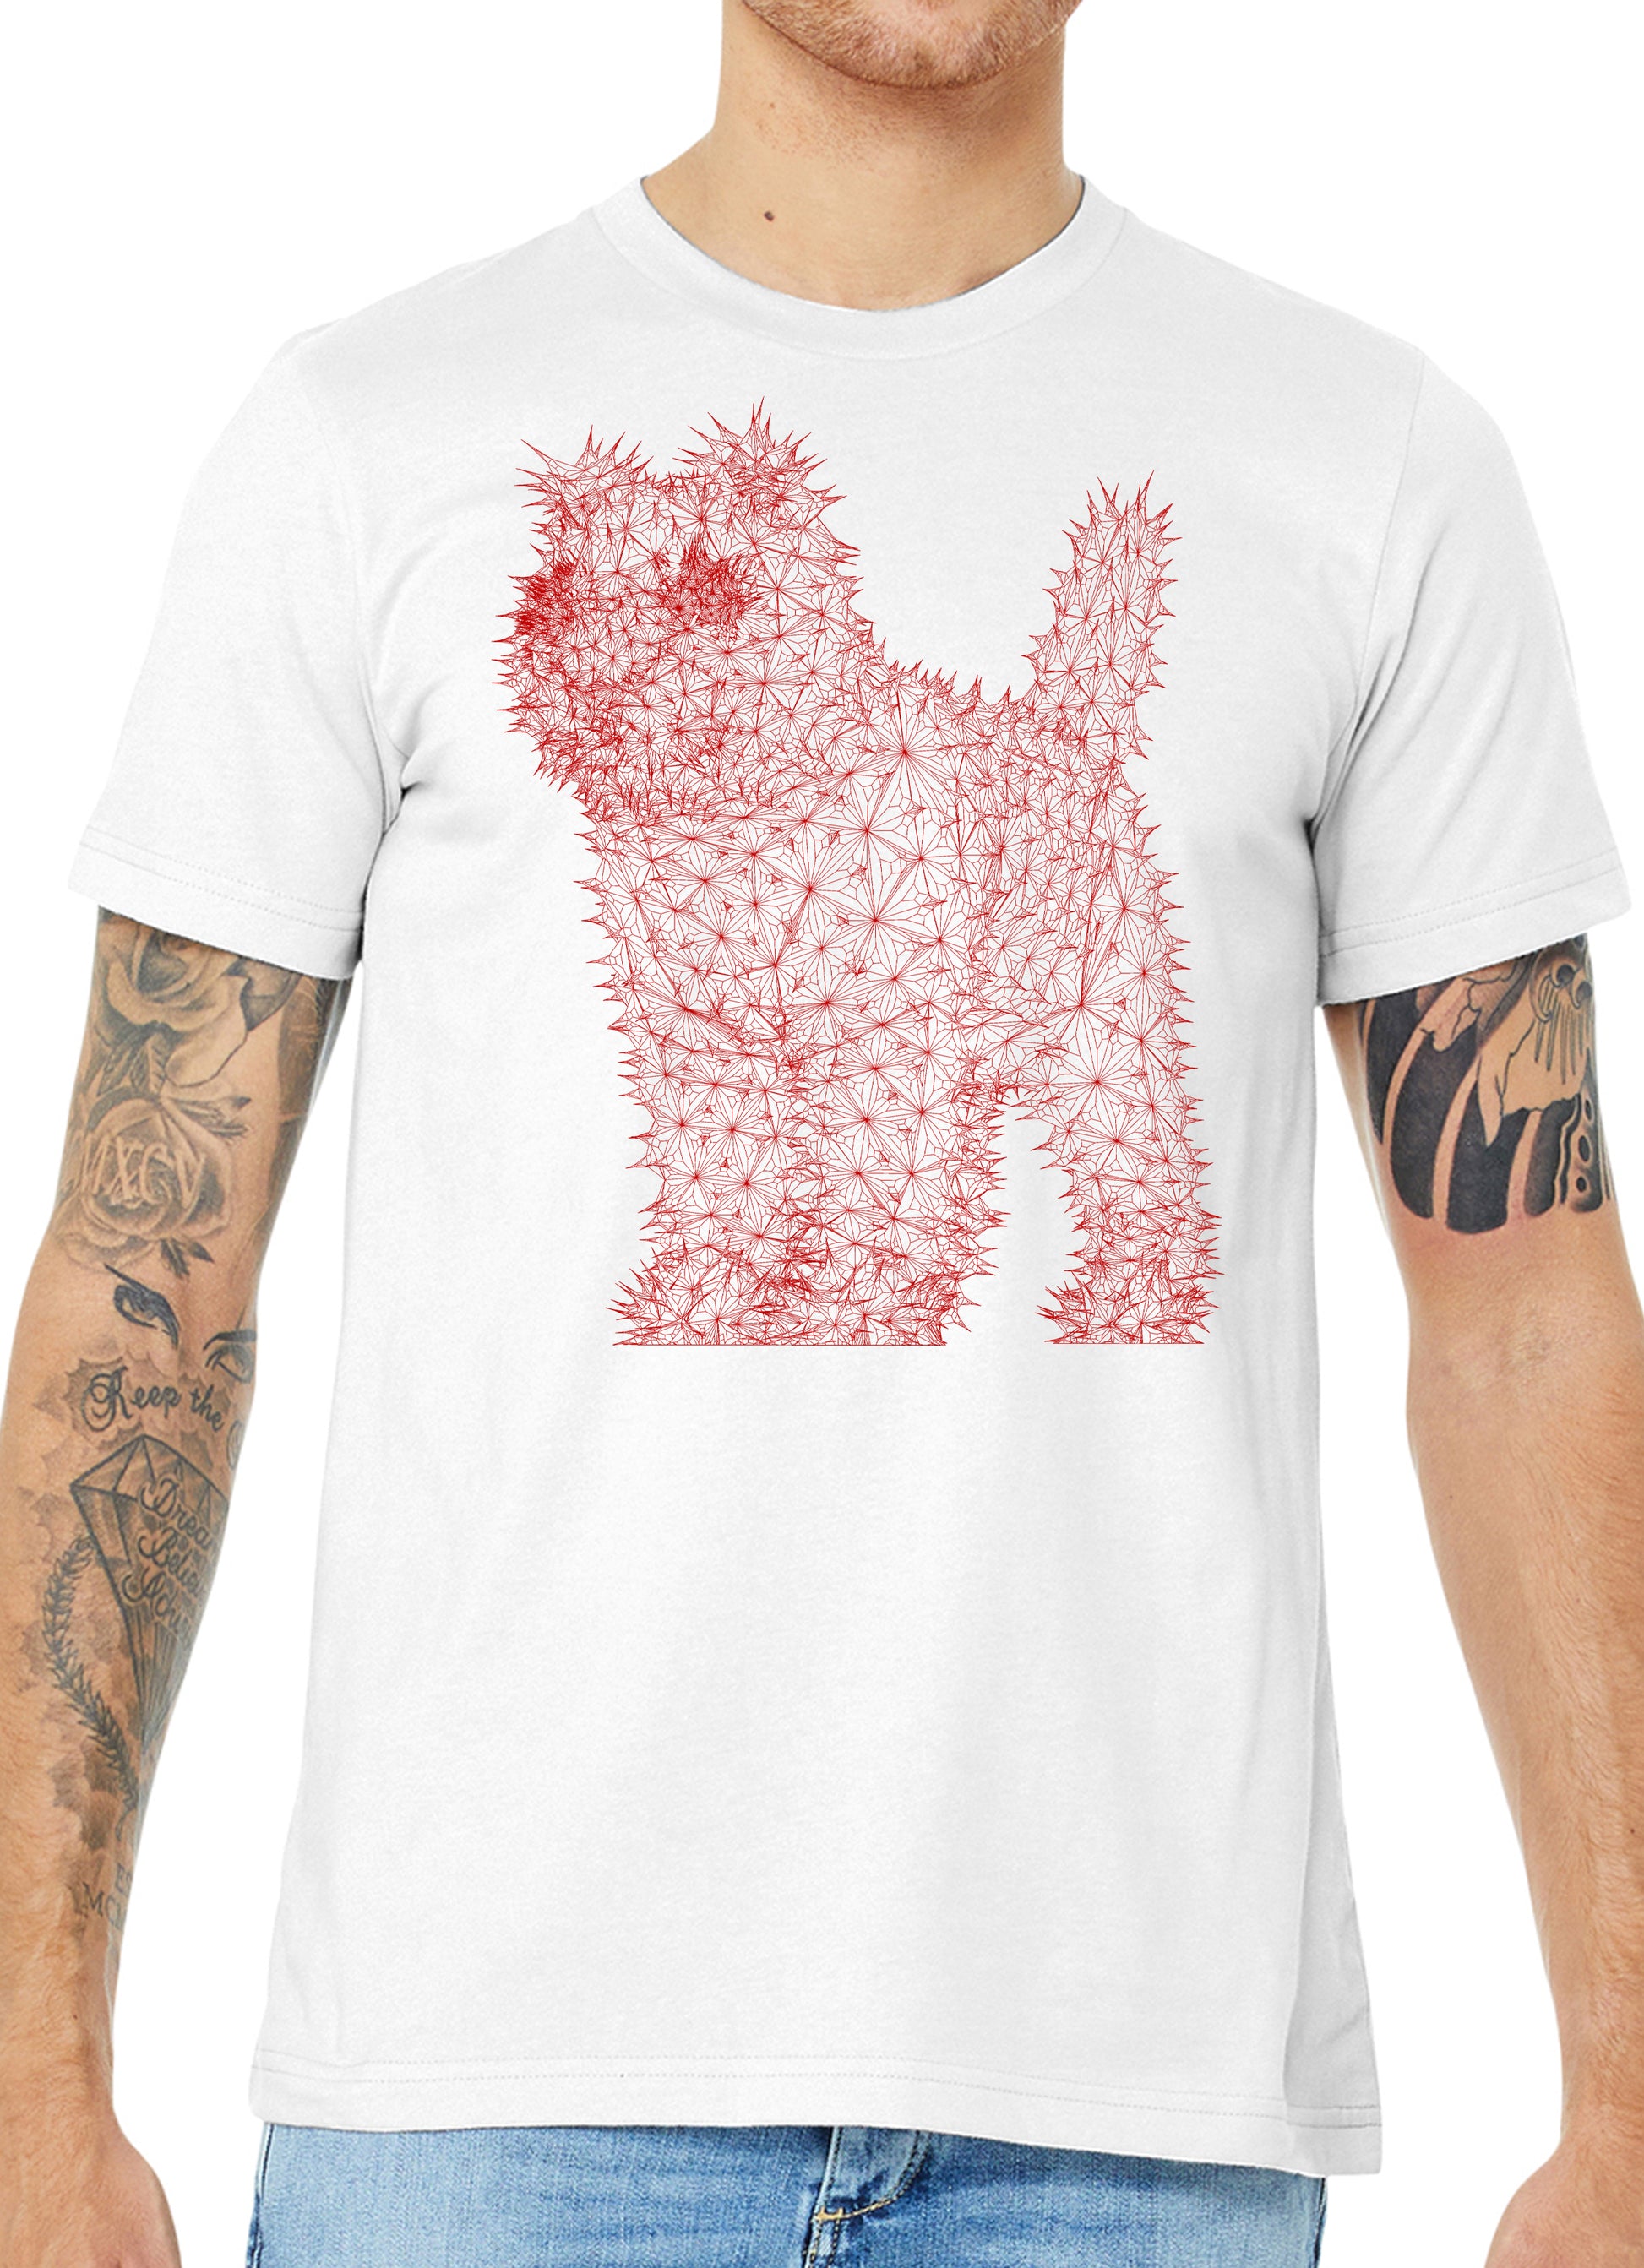 geometric cat, wireframe cat, cat tshirt, cat lovers